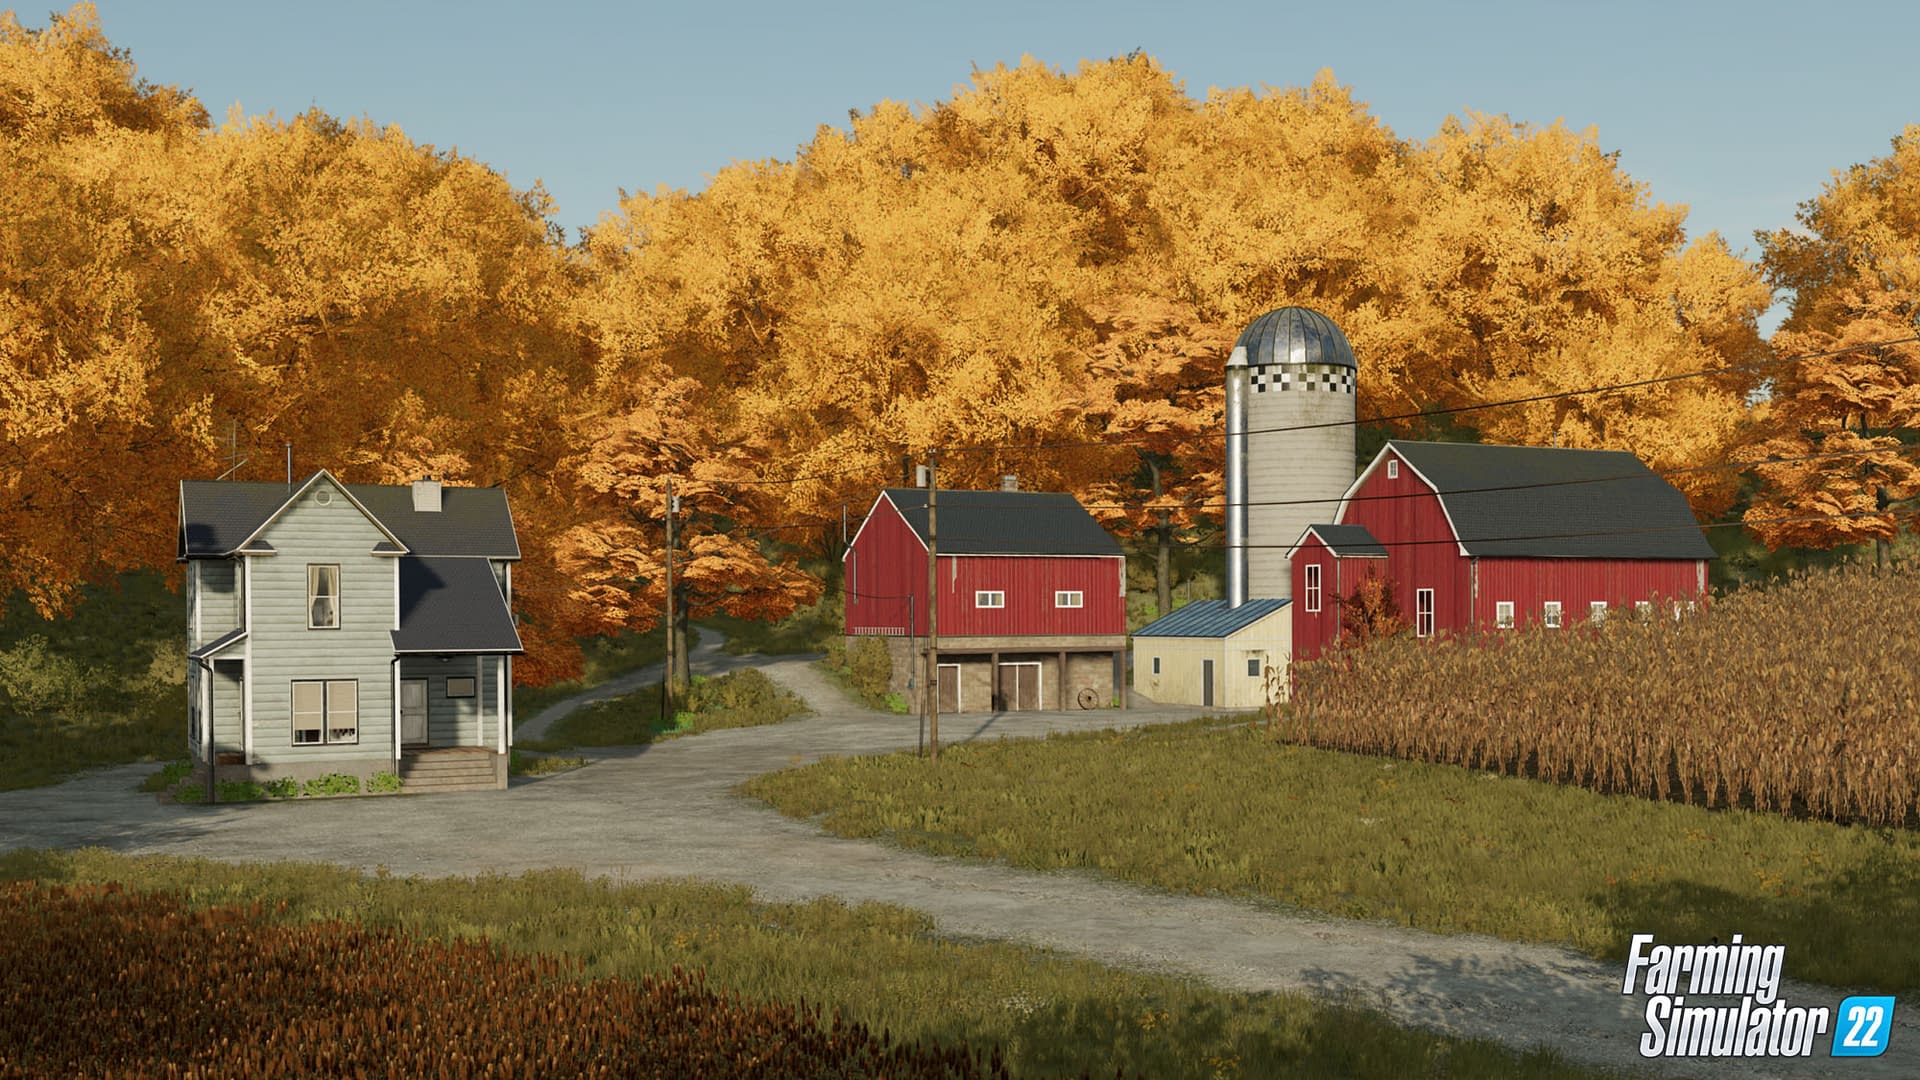 Farming Simulator Reveals New Map Called Elmcreek